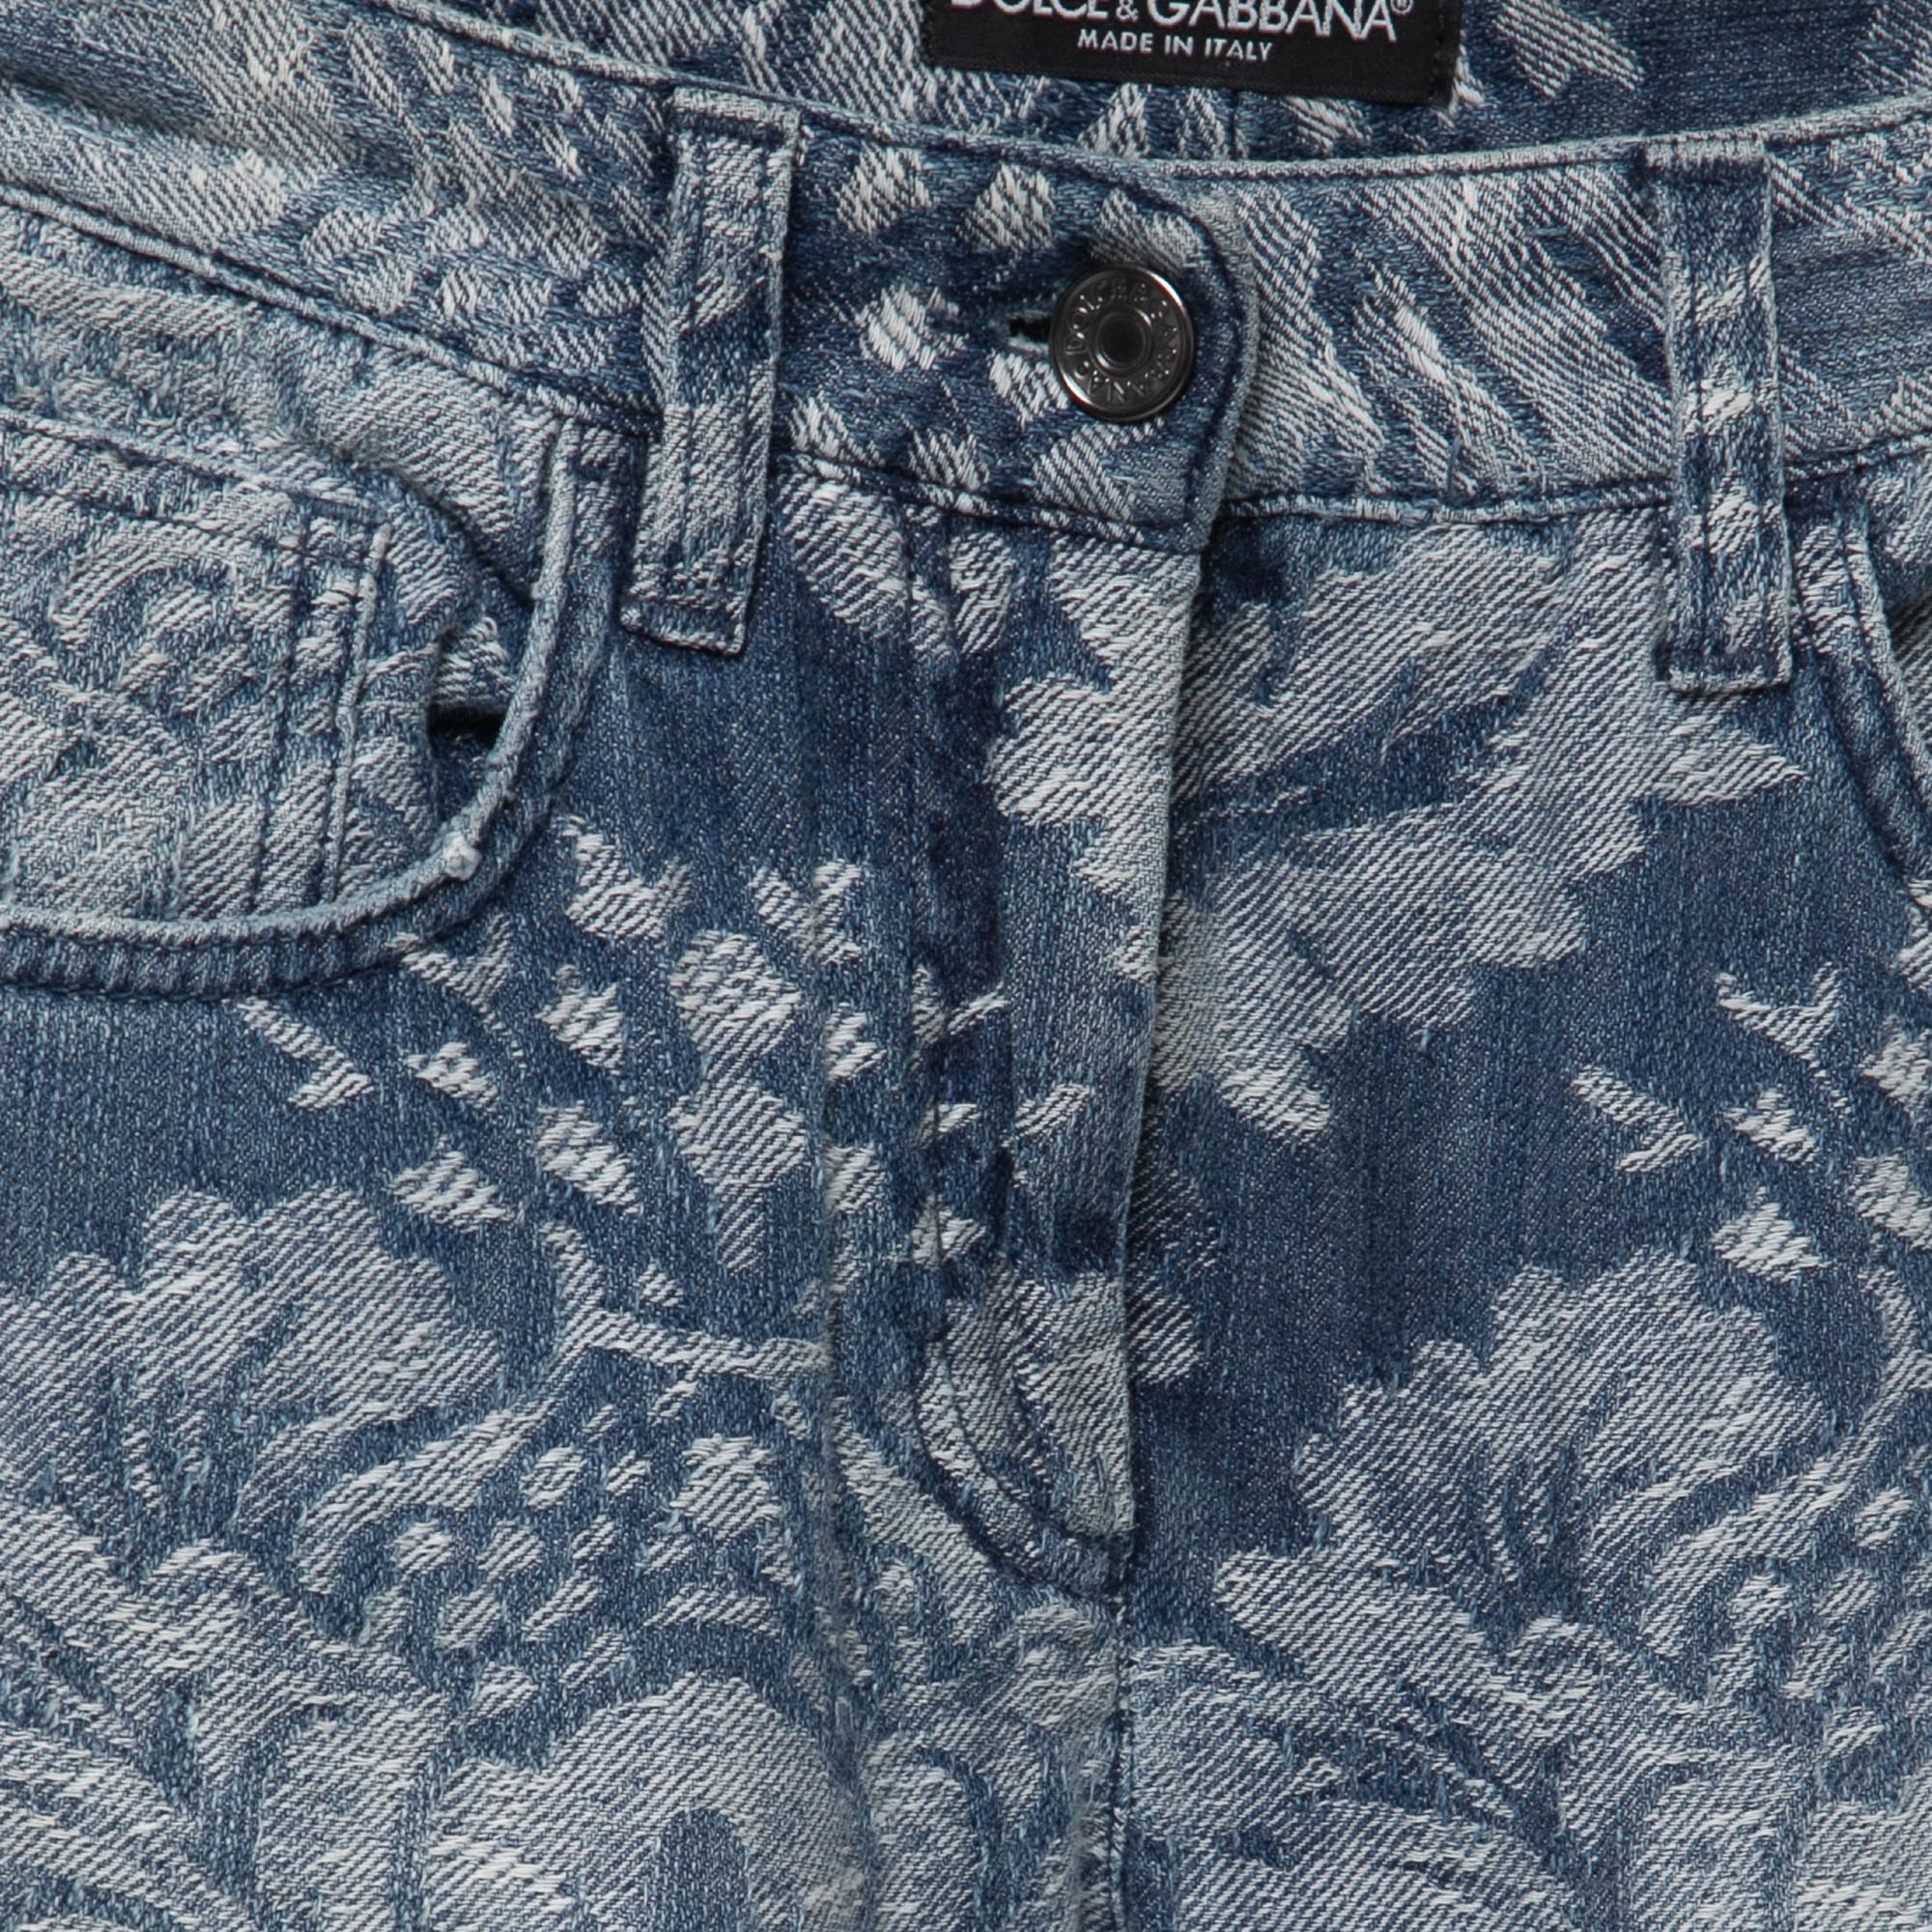 Dolce & Gabbana Blue Jacquard Denim Jeans XS Waist 24